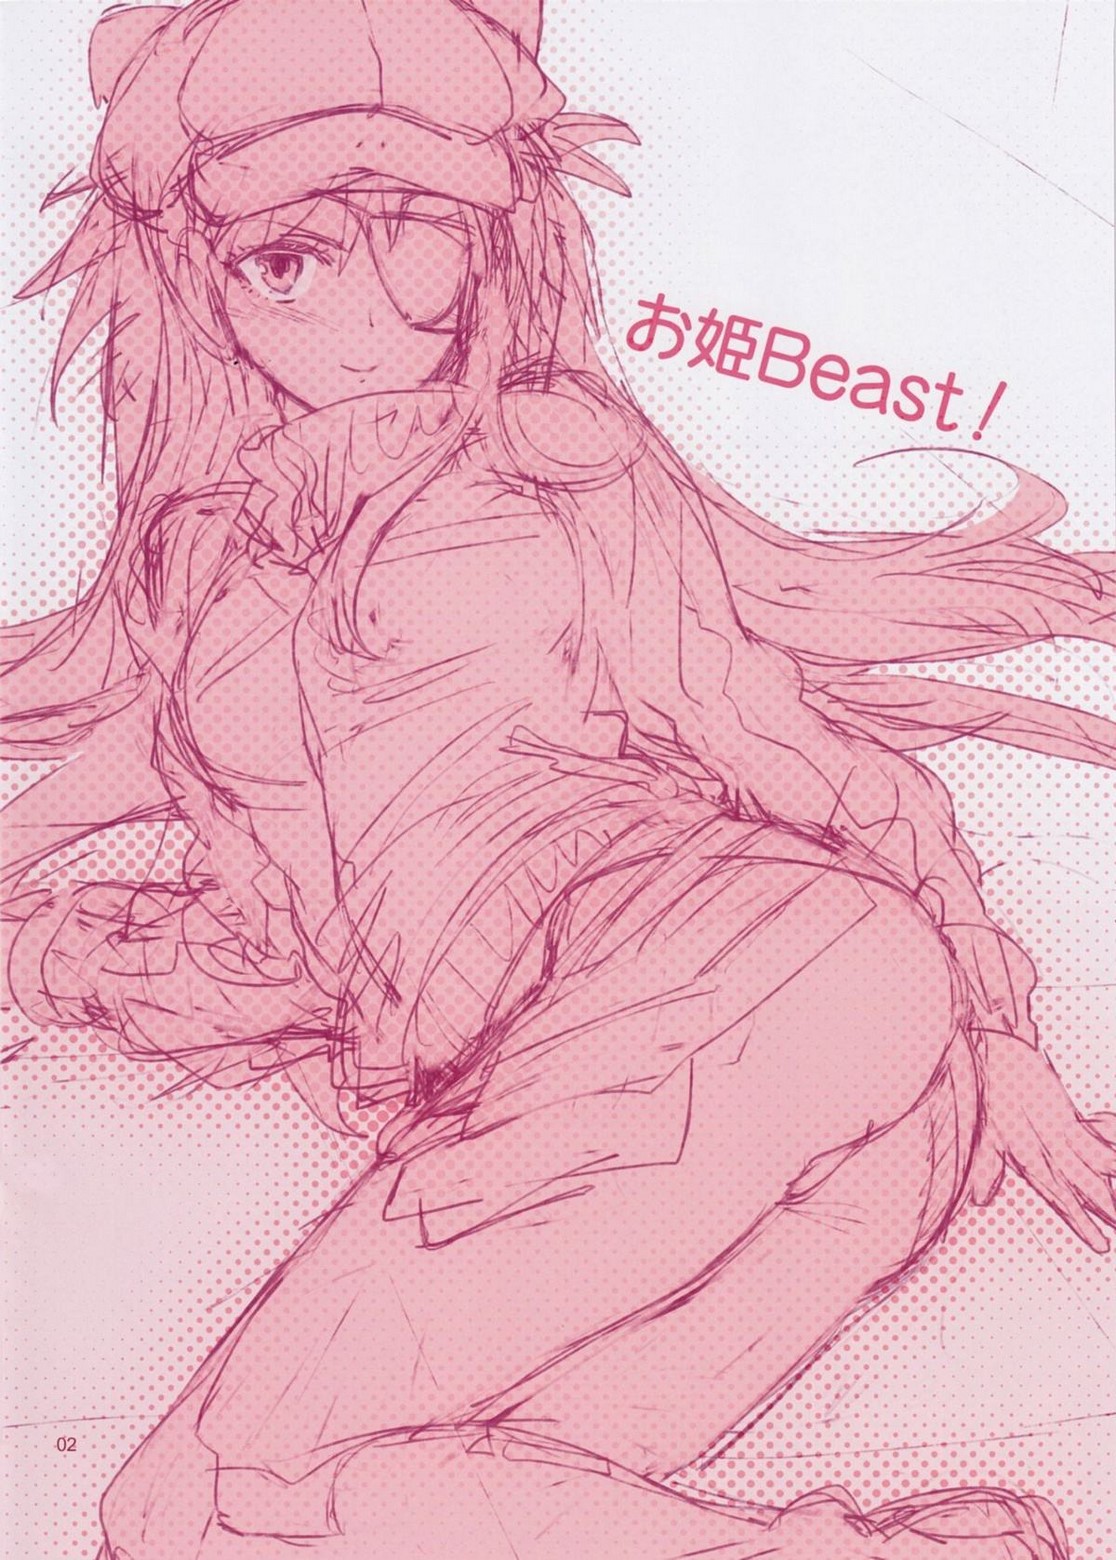 Ohime Beast - 3